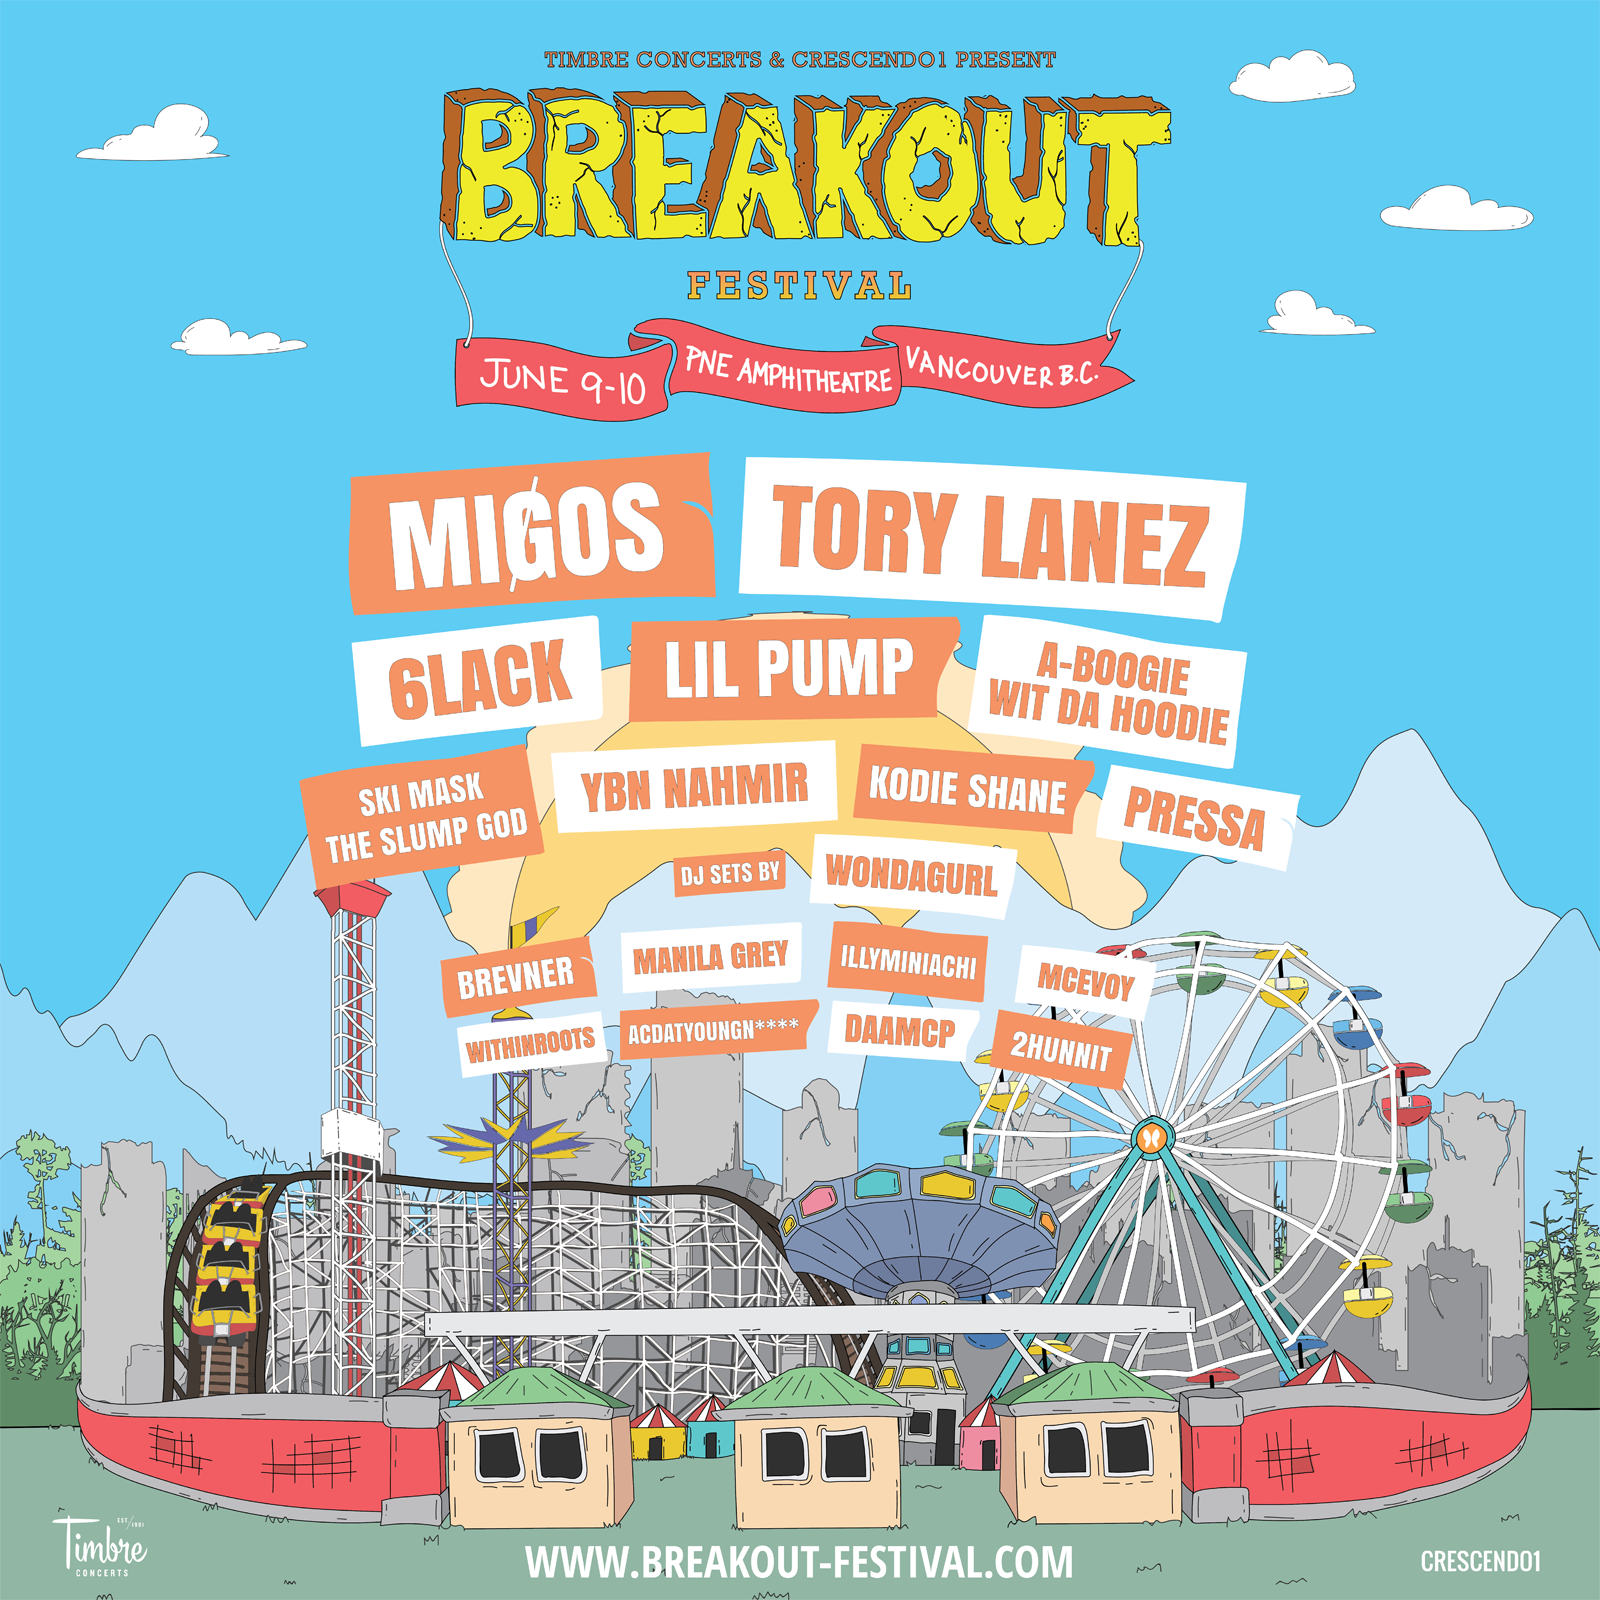 Breakout Festival 2018 PNE